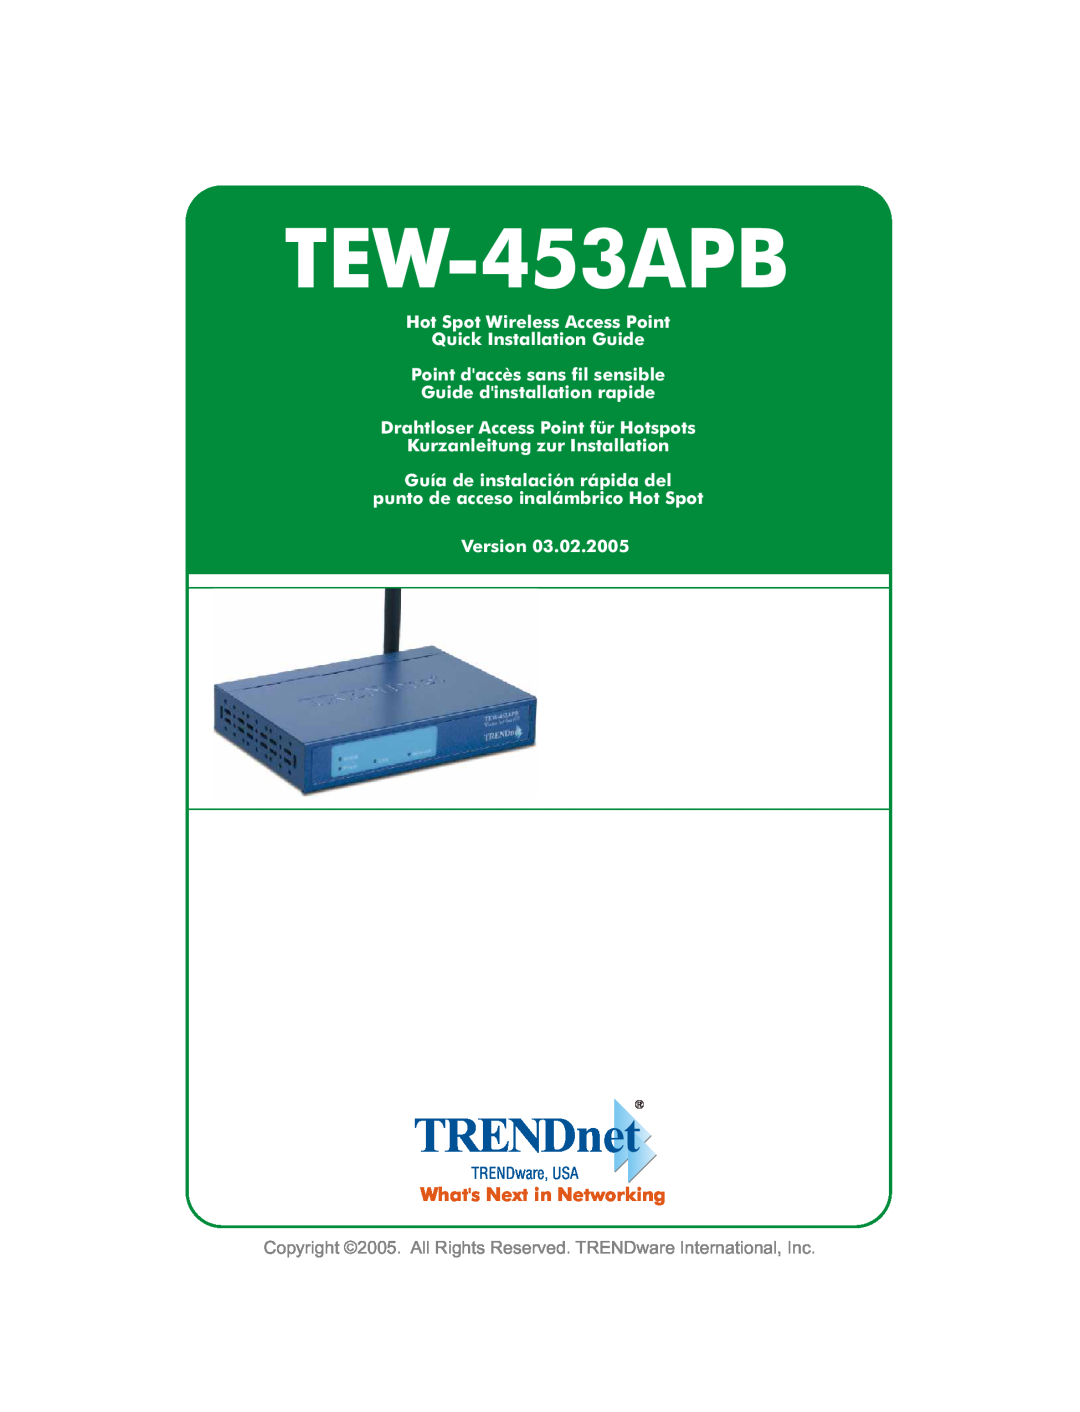 TRENDnet Net Spot Wireless Access Point manual TEW-453APB, TRENDnet, Whats Next in Networking, Version, TRENDware, USA 